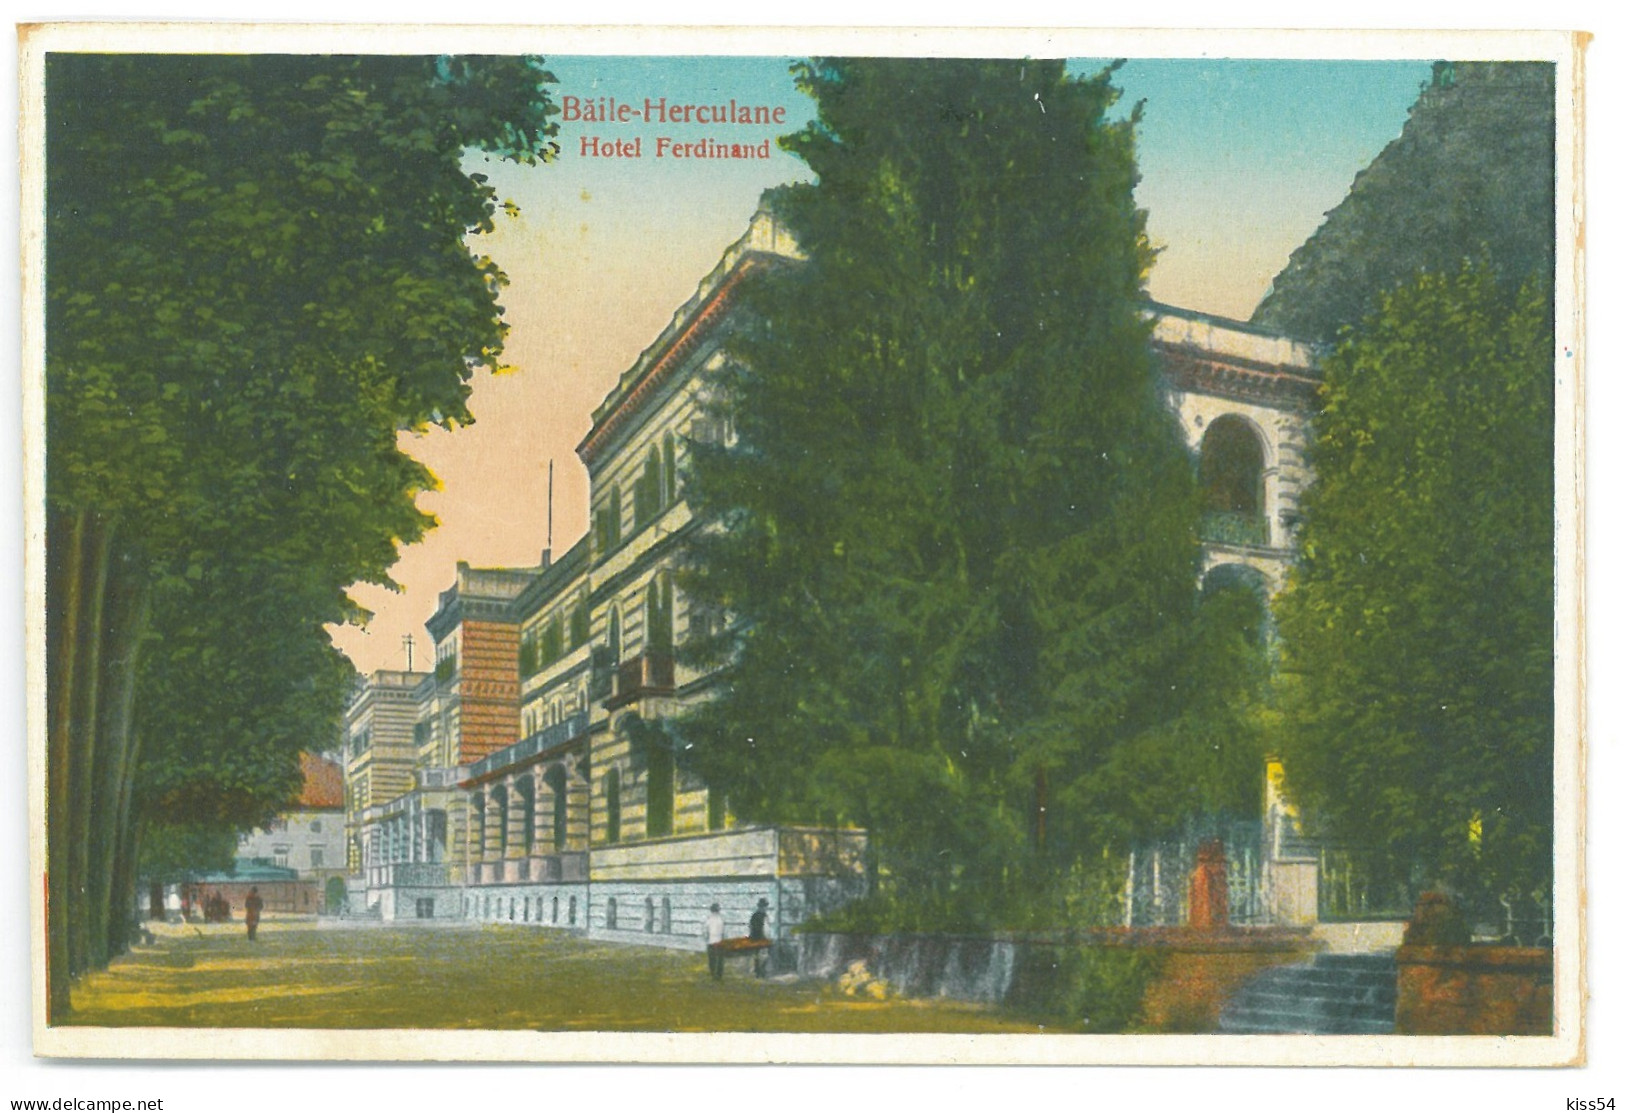 RO 38 - 25080 Baile HERCULANE, Caras-Severin, Ferdinand Hotel, Romania - Old Postcard - Unused - Roumanie